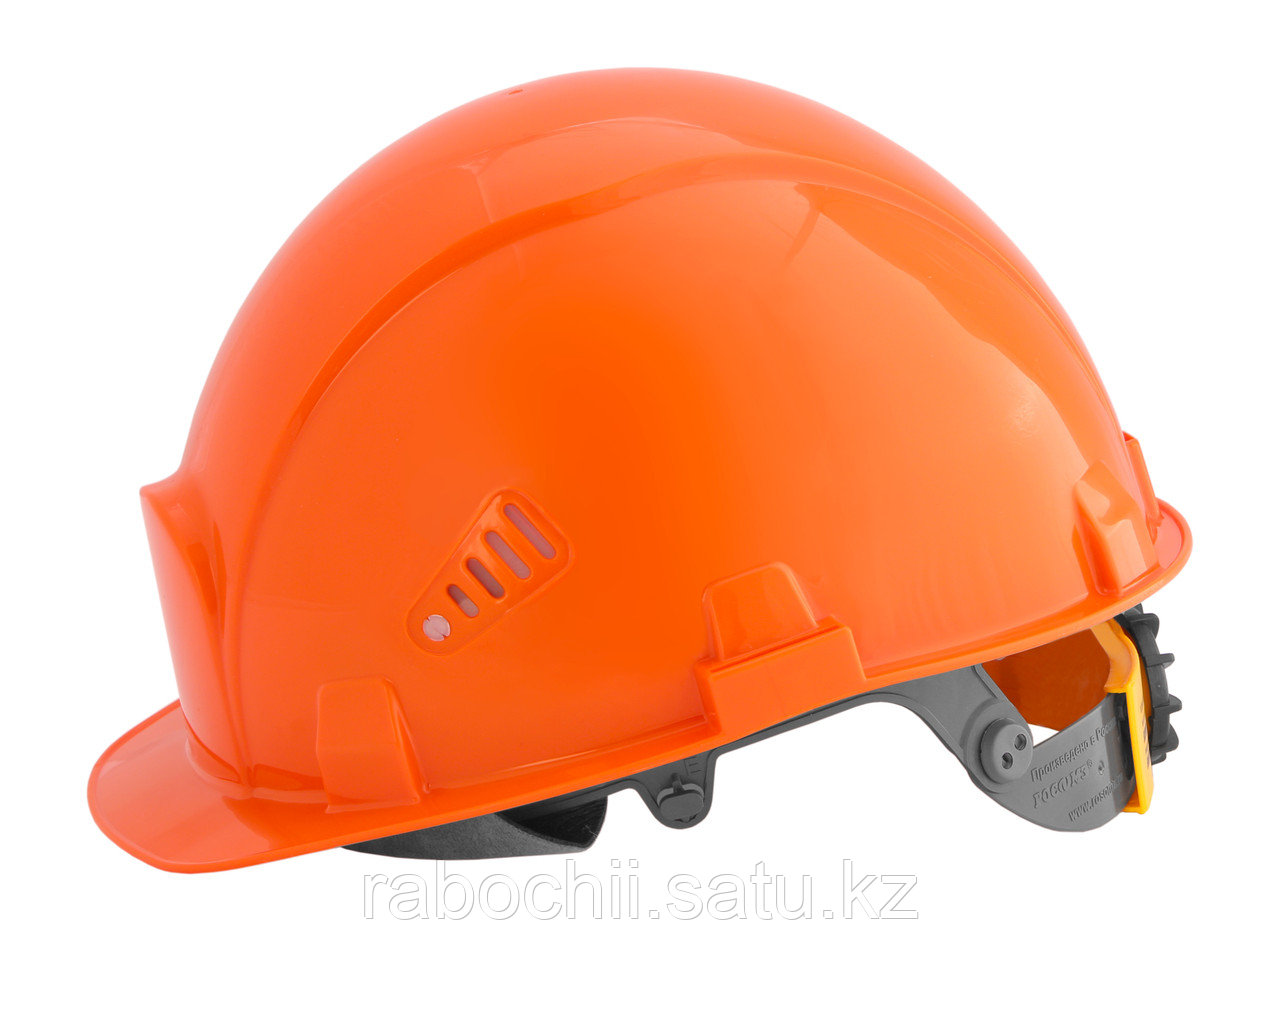 Каска защитная СОМЗ-55 Визион® Rapid оранжевый